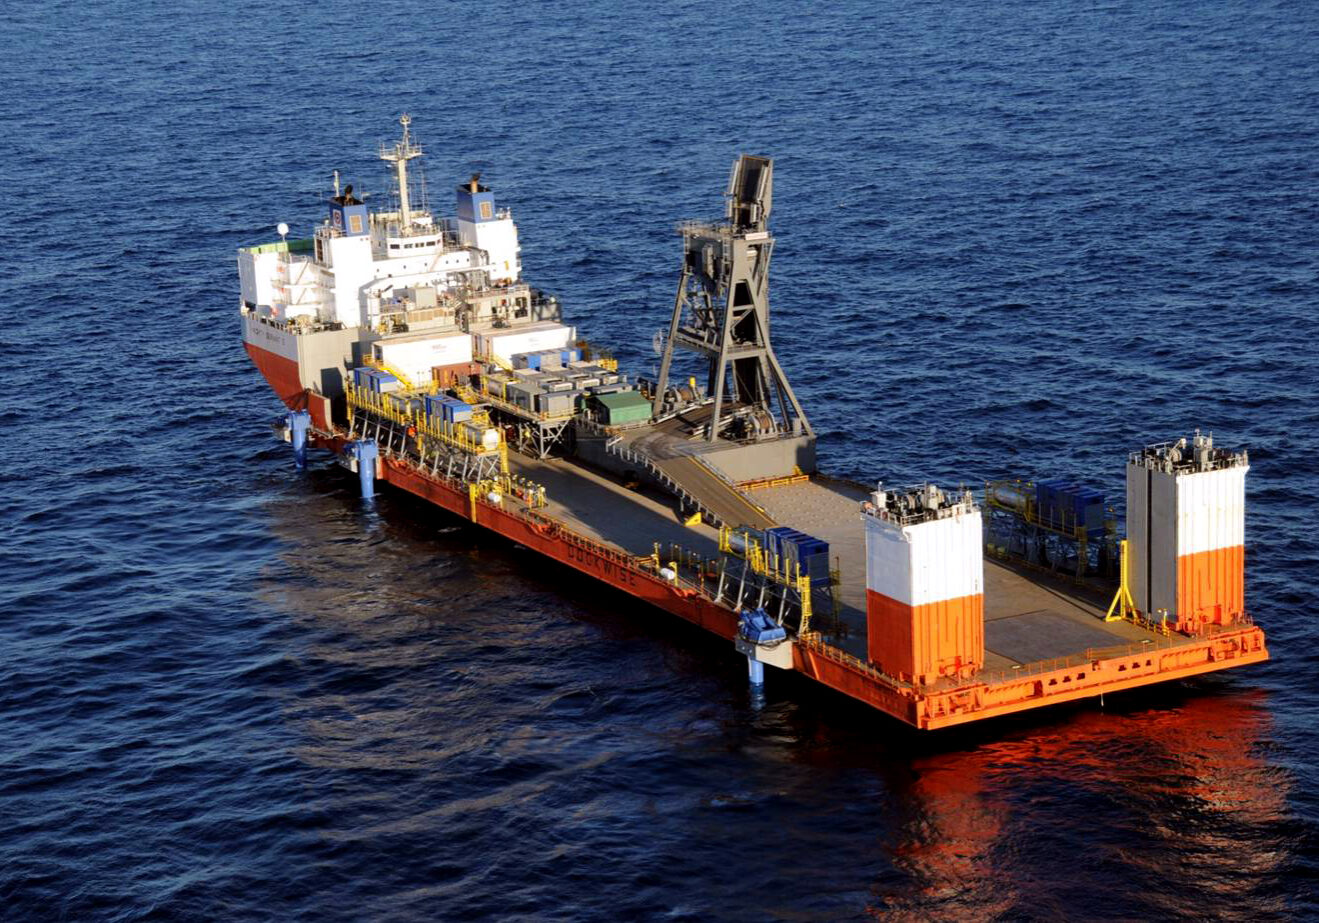 Ocean drilling ship out at sea